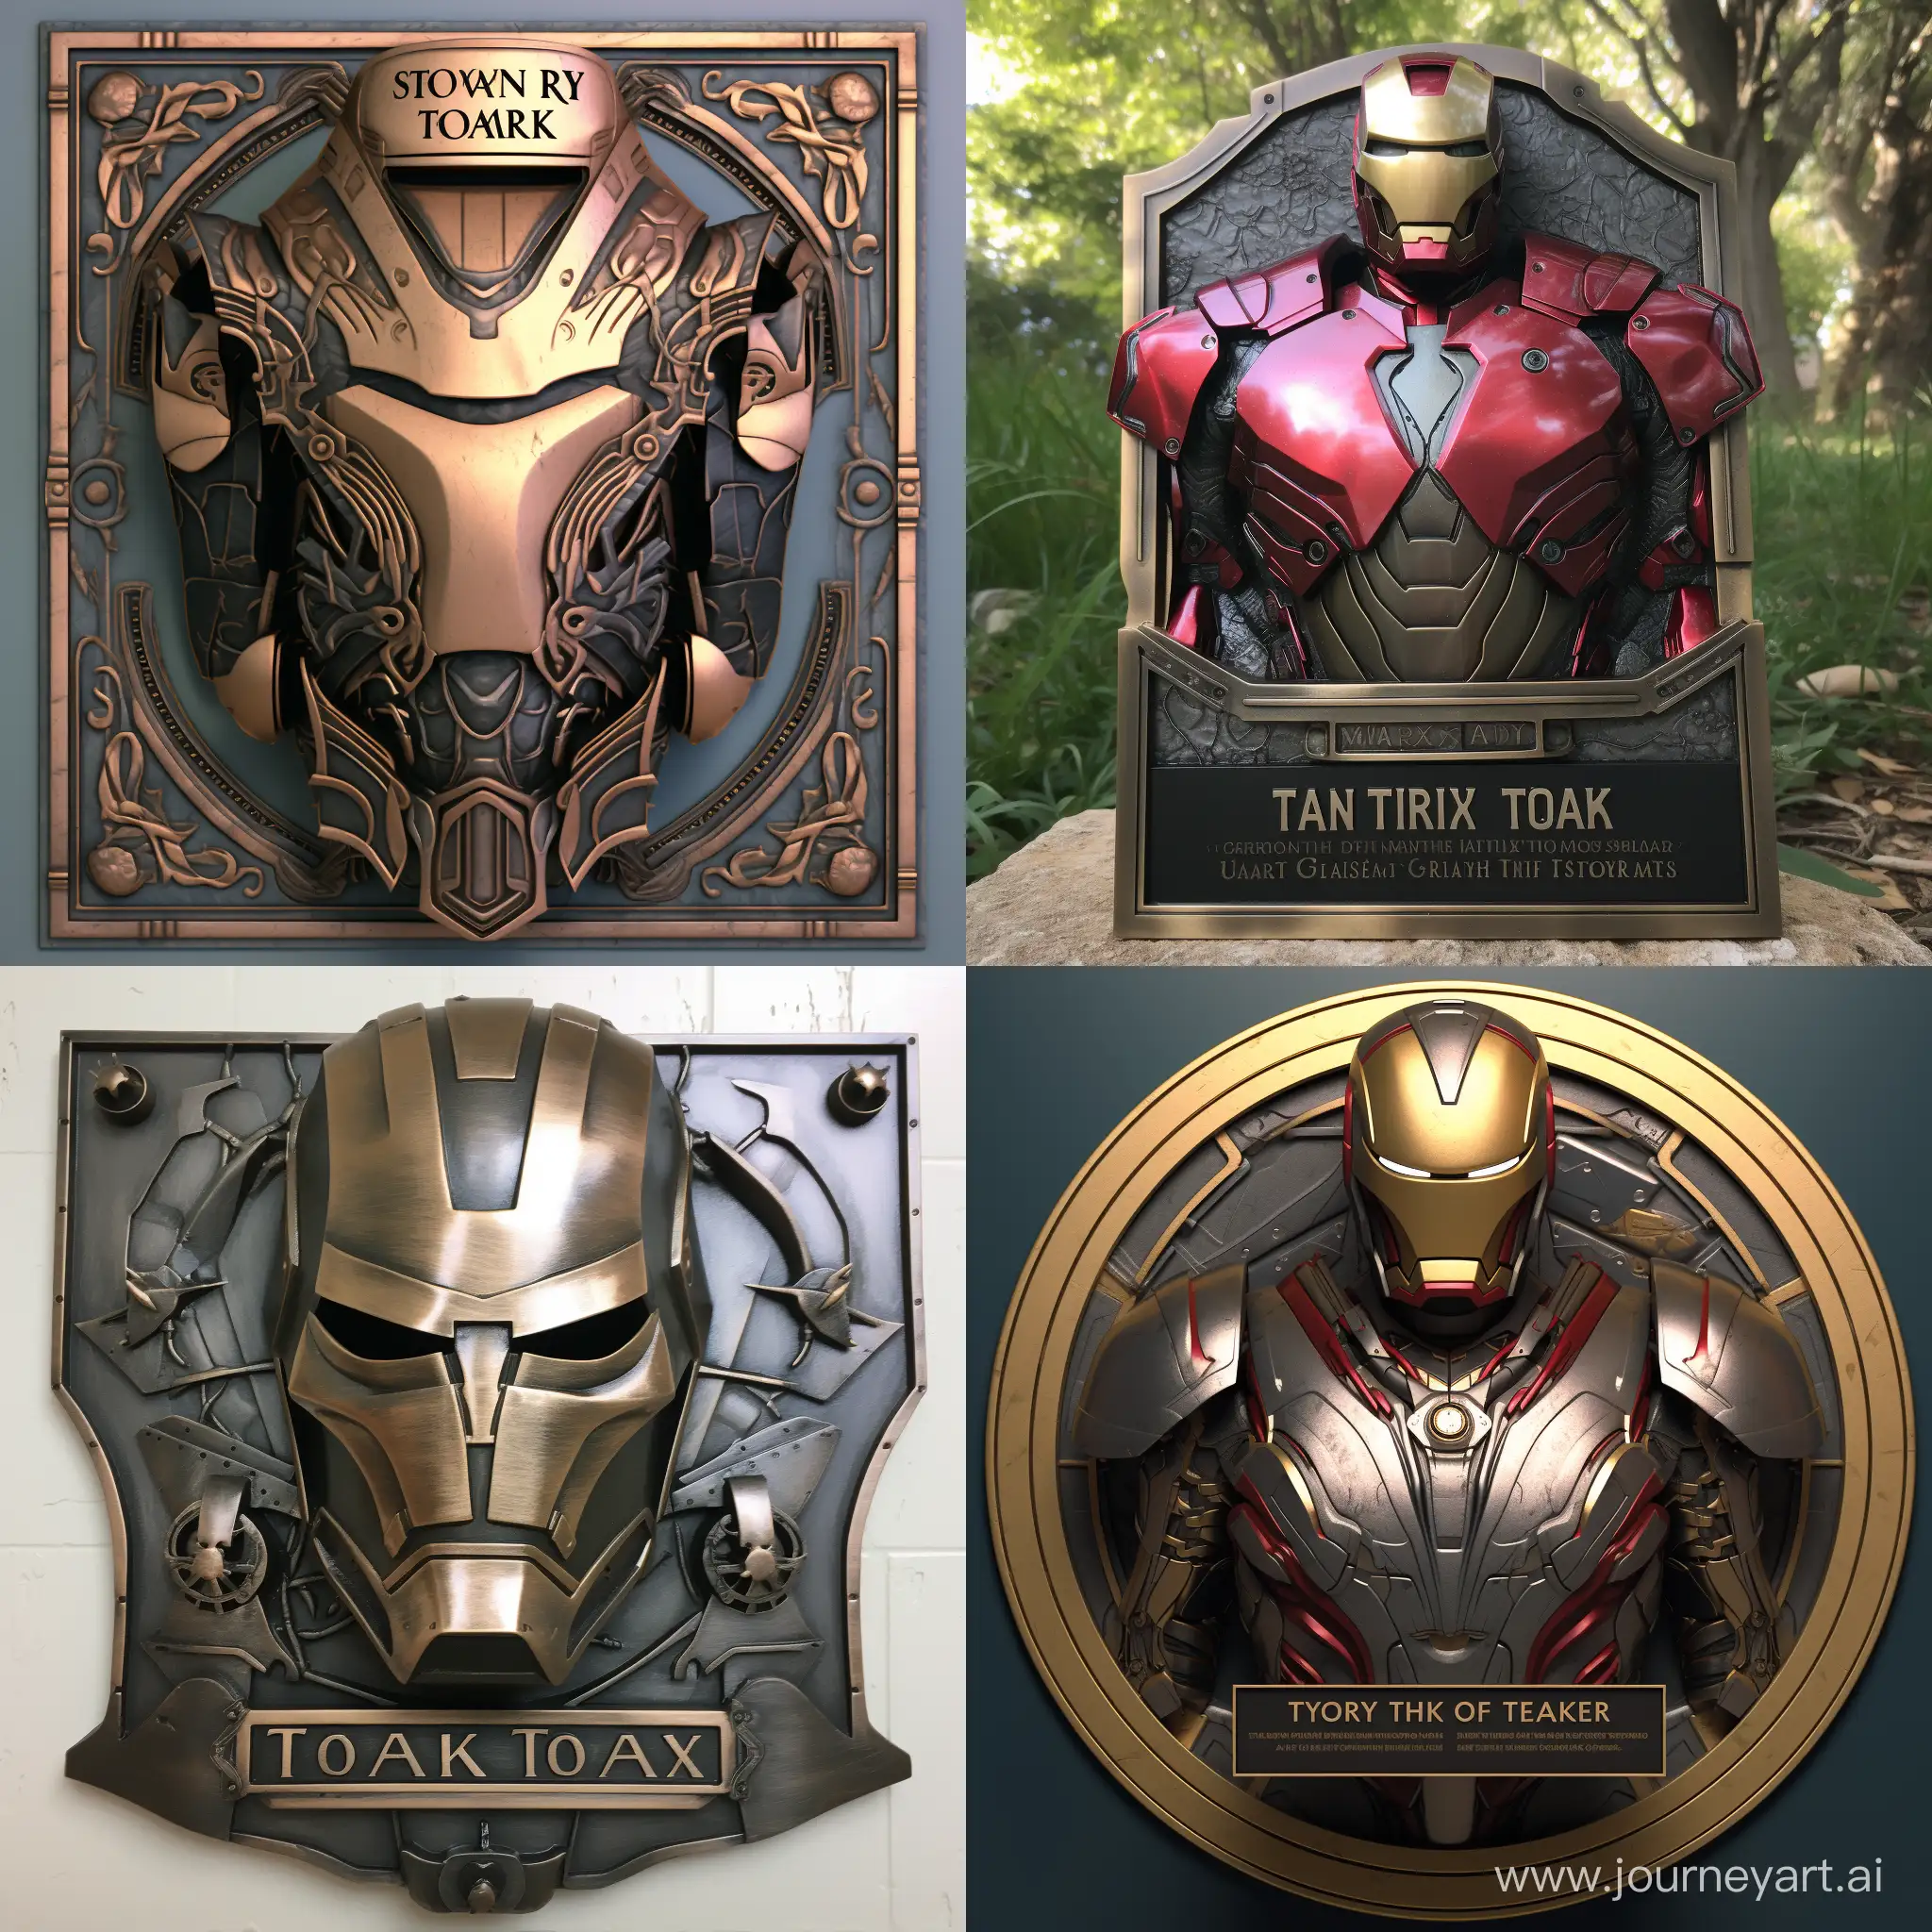 Tony-Stark-Memorial-Plaque-Tribute-to-a-Marvel-Legend